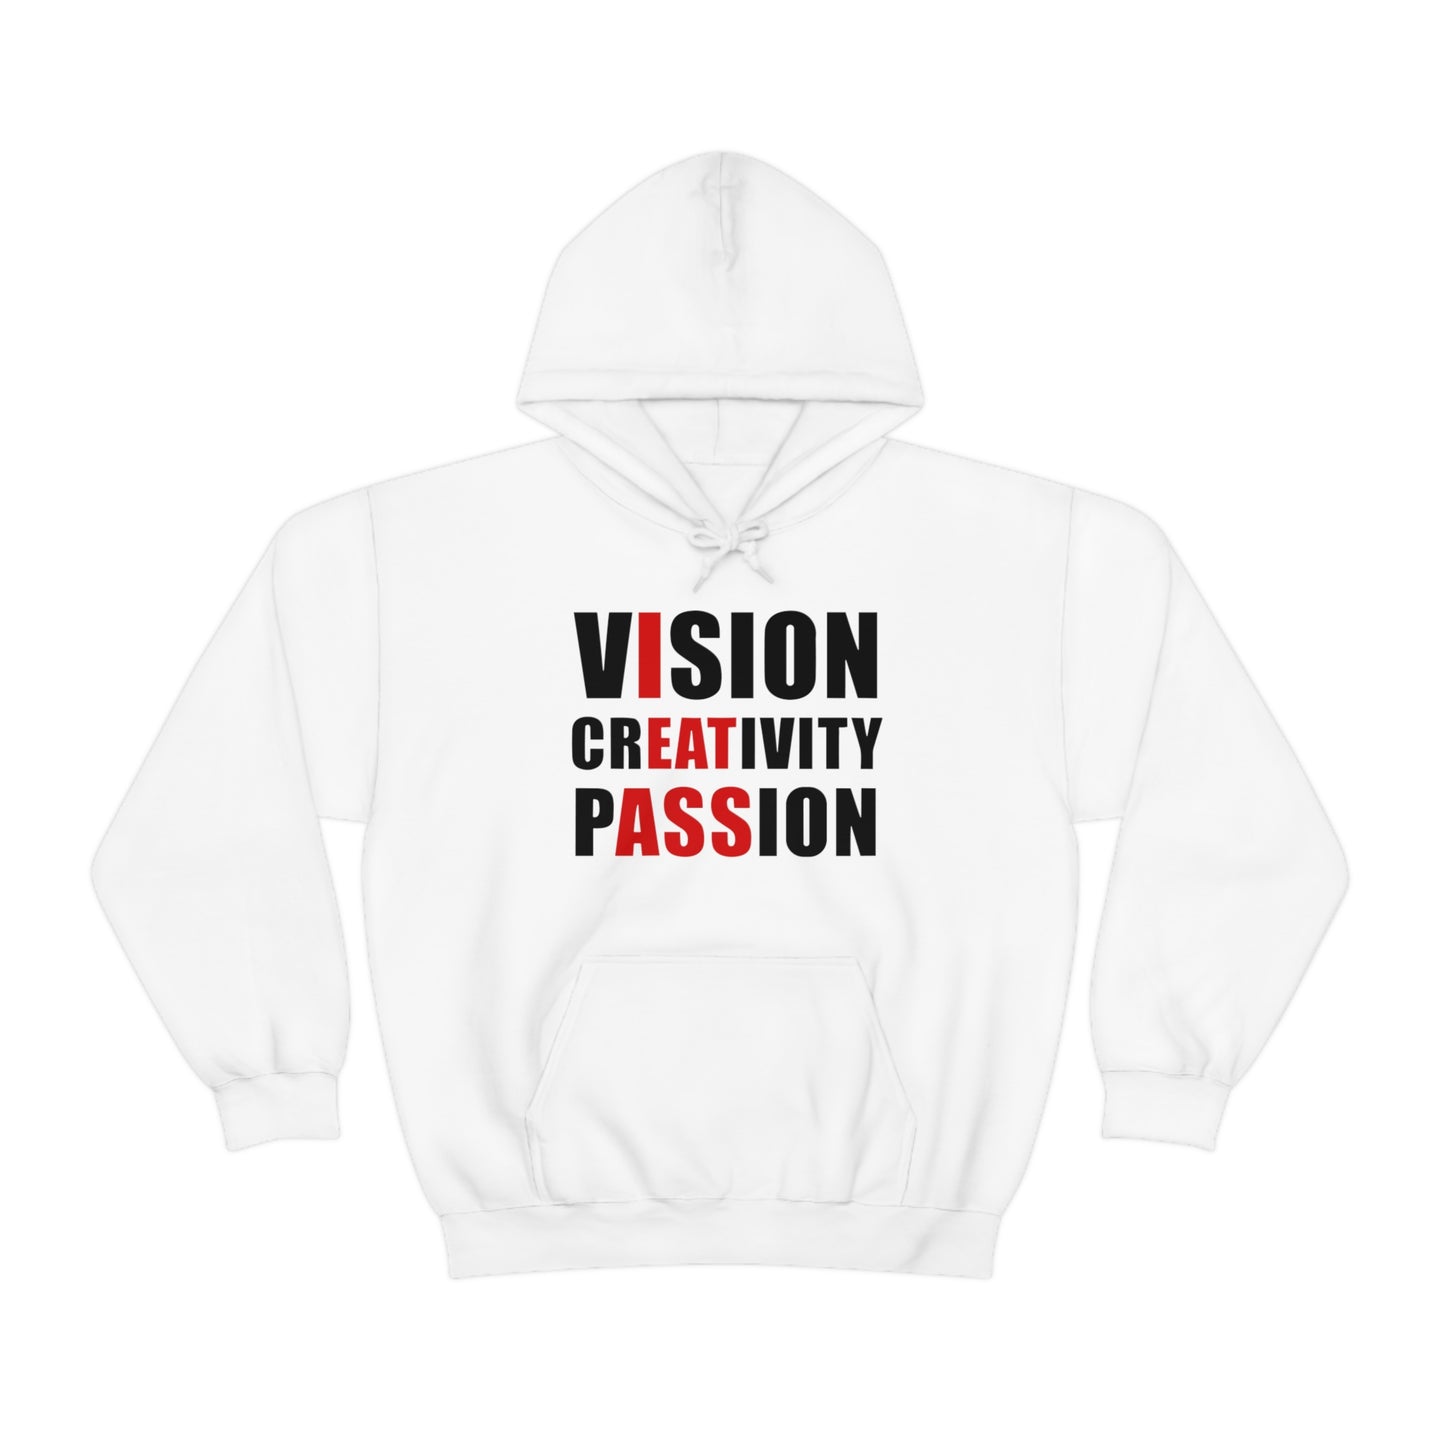 "Vision Creativity Passion" Hoodie